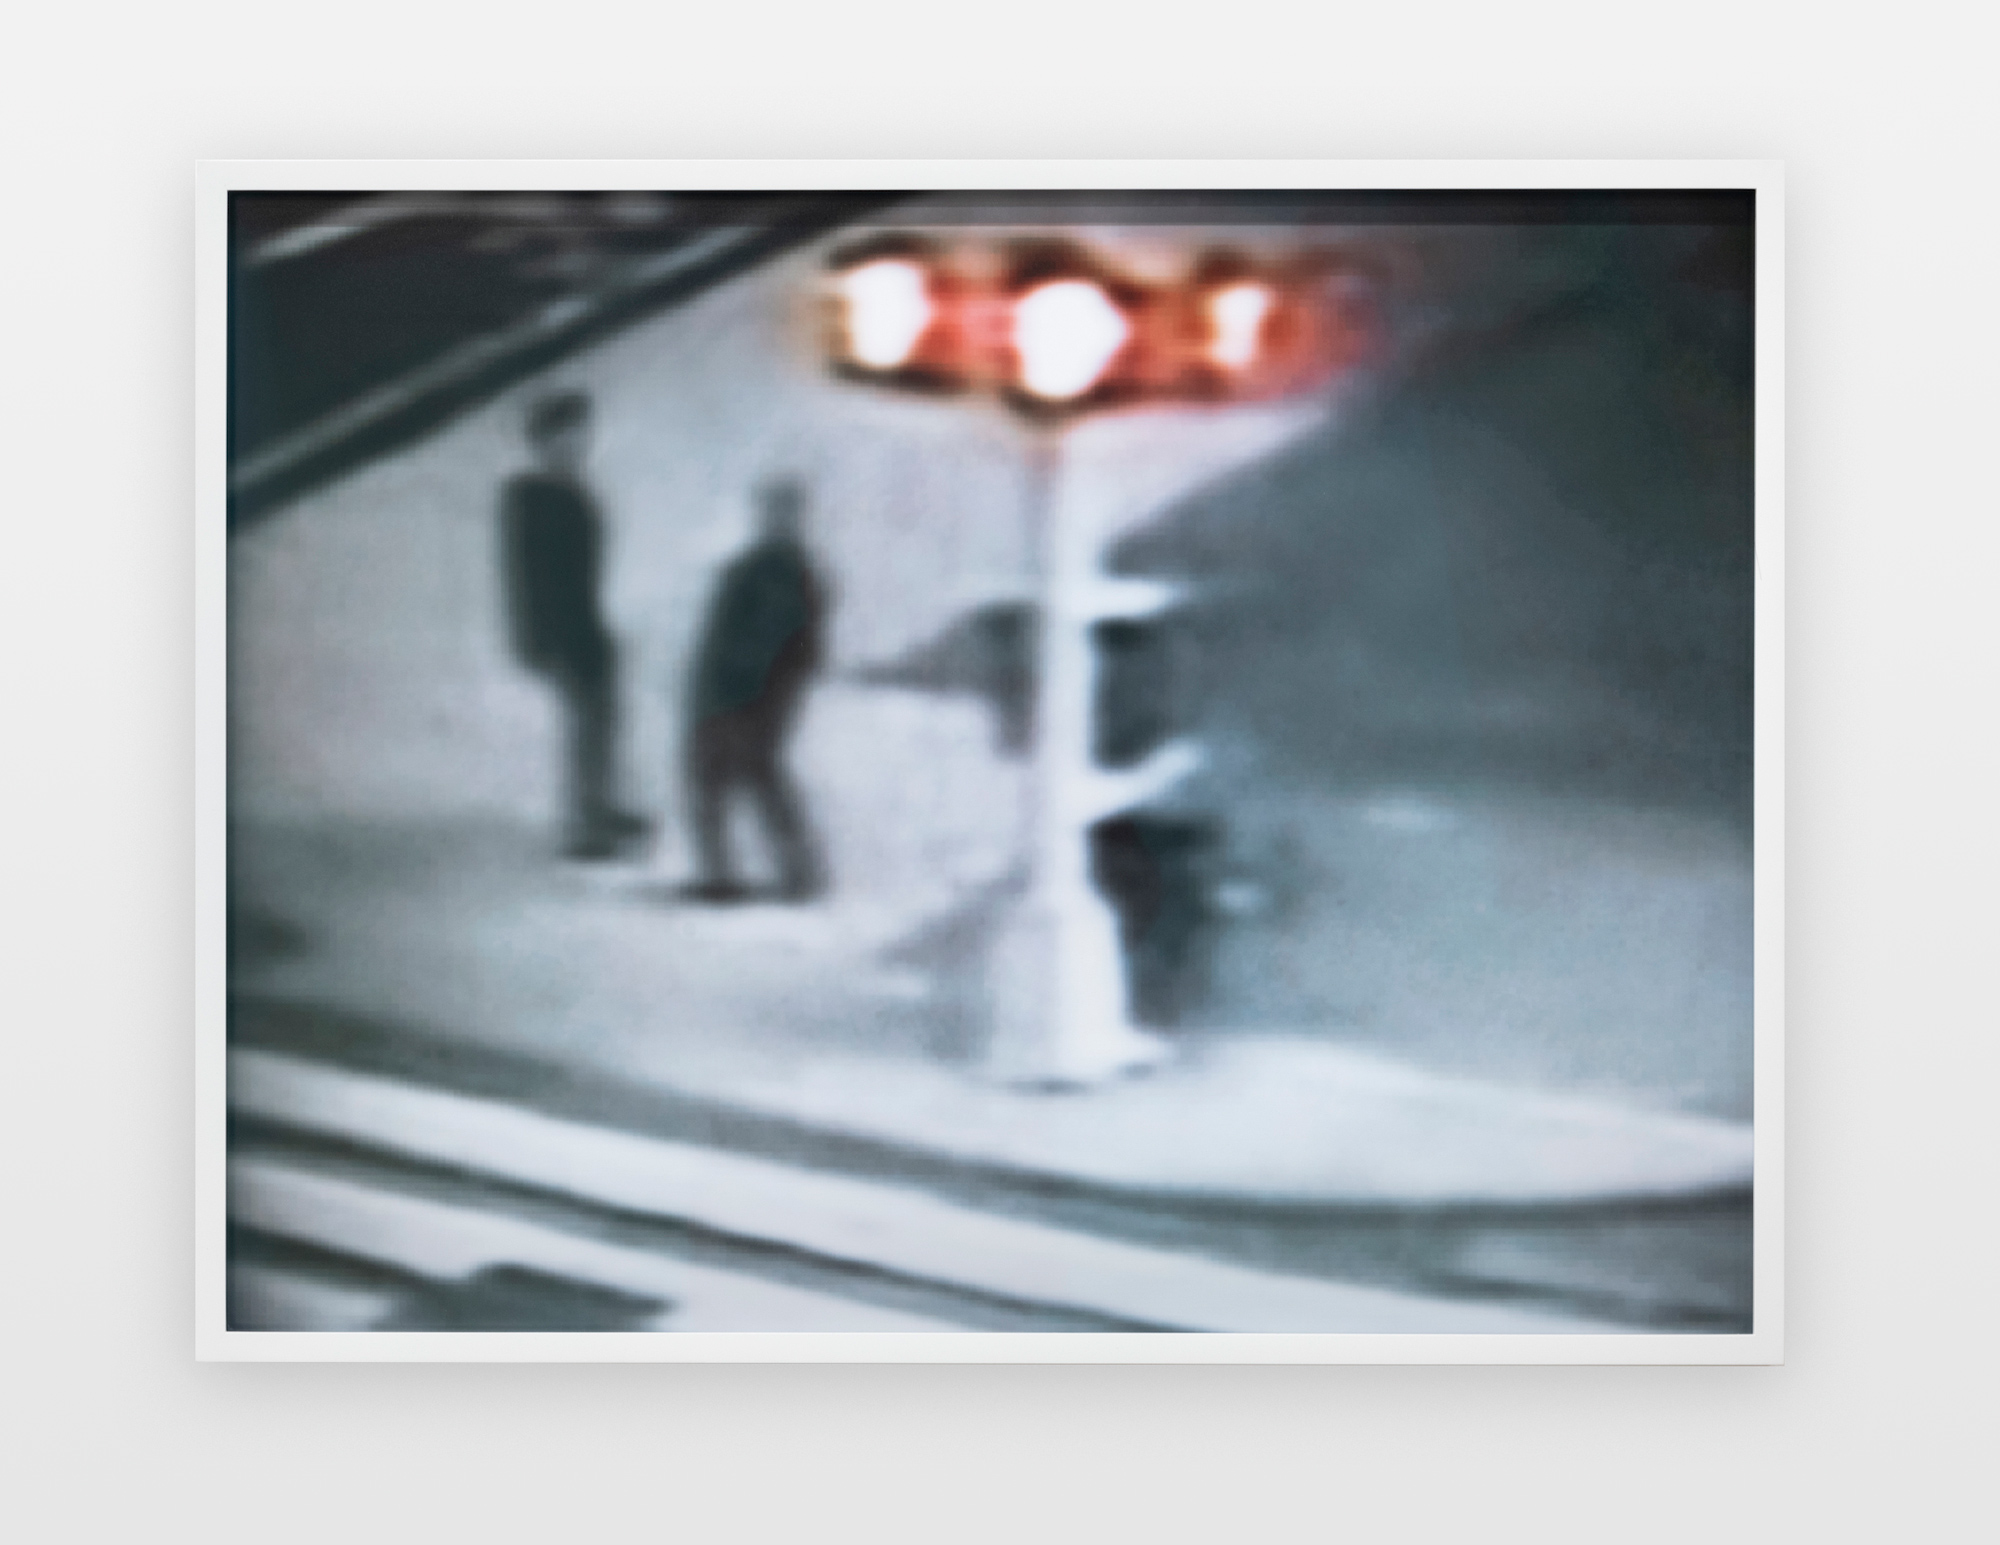 Barbara Ess, Guys On Corner [Remote Series], 2012-2019, archival pigment print, 24h x 31.94w in.